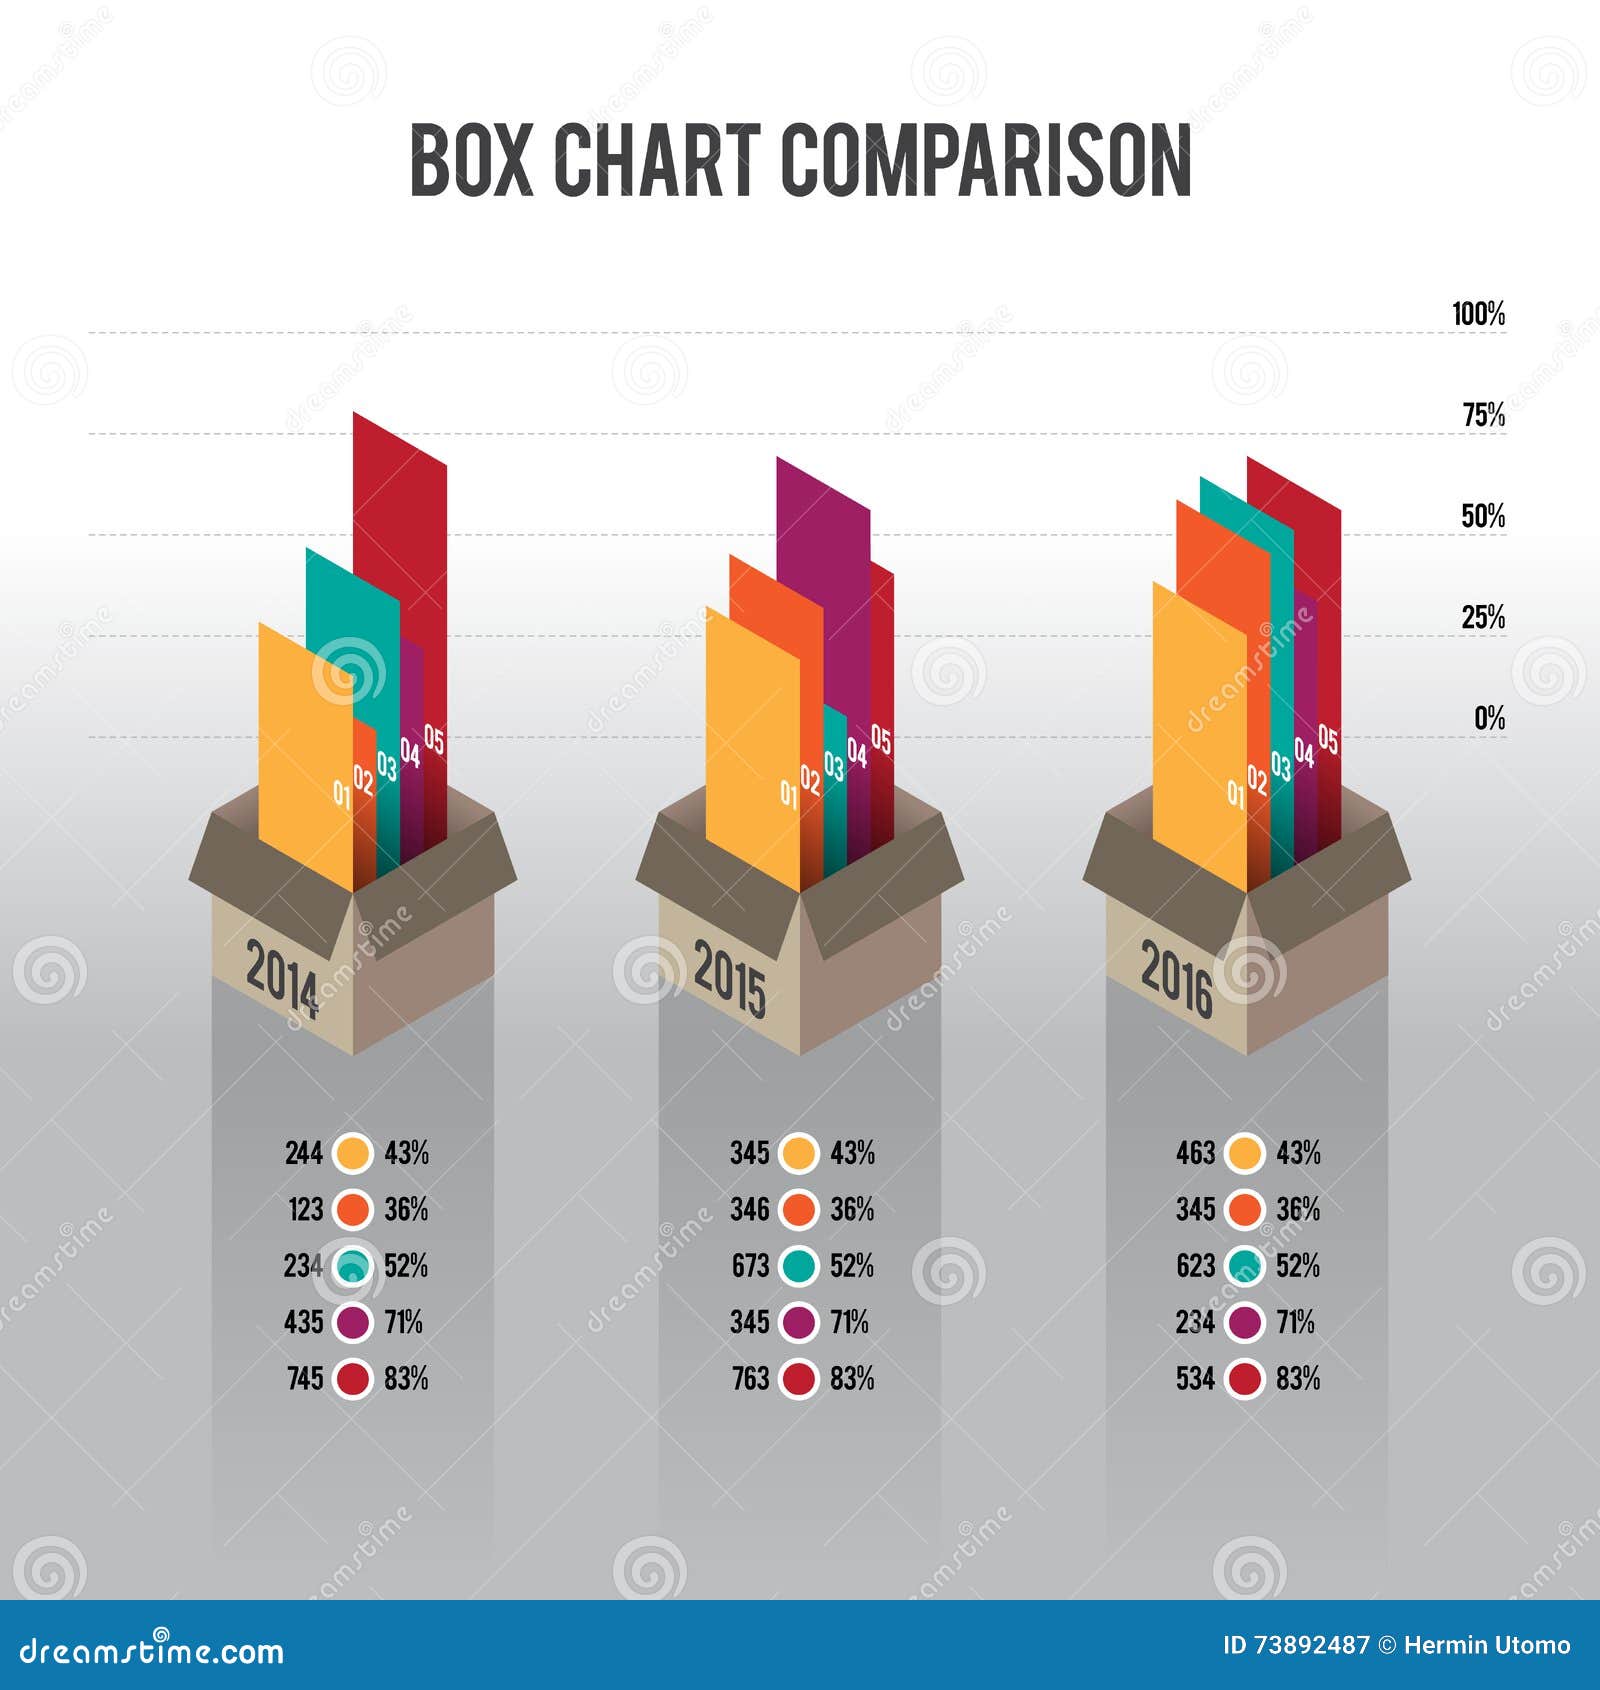 Infographic Comparison Chart